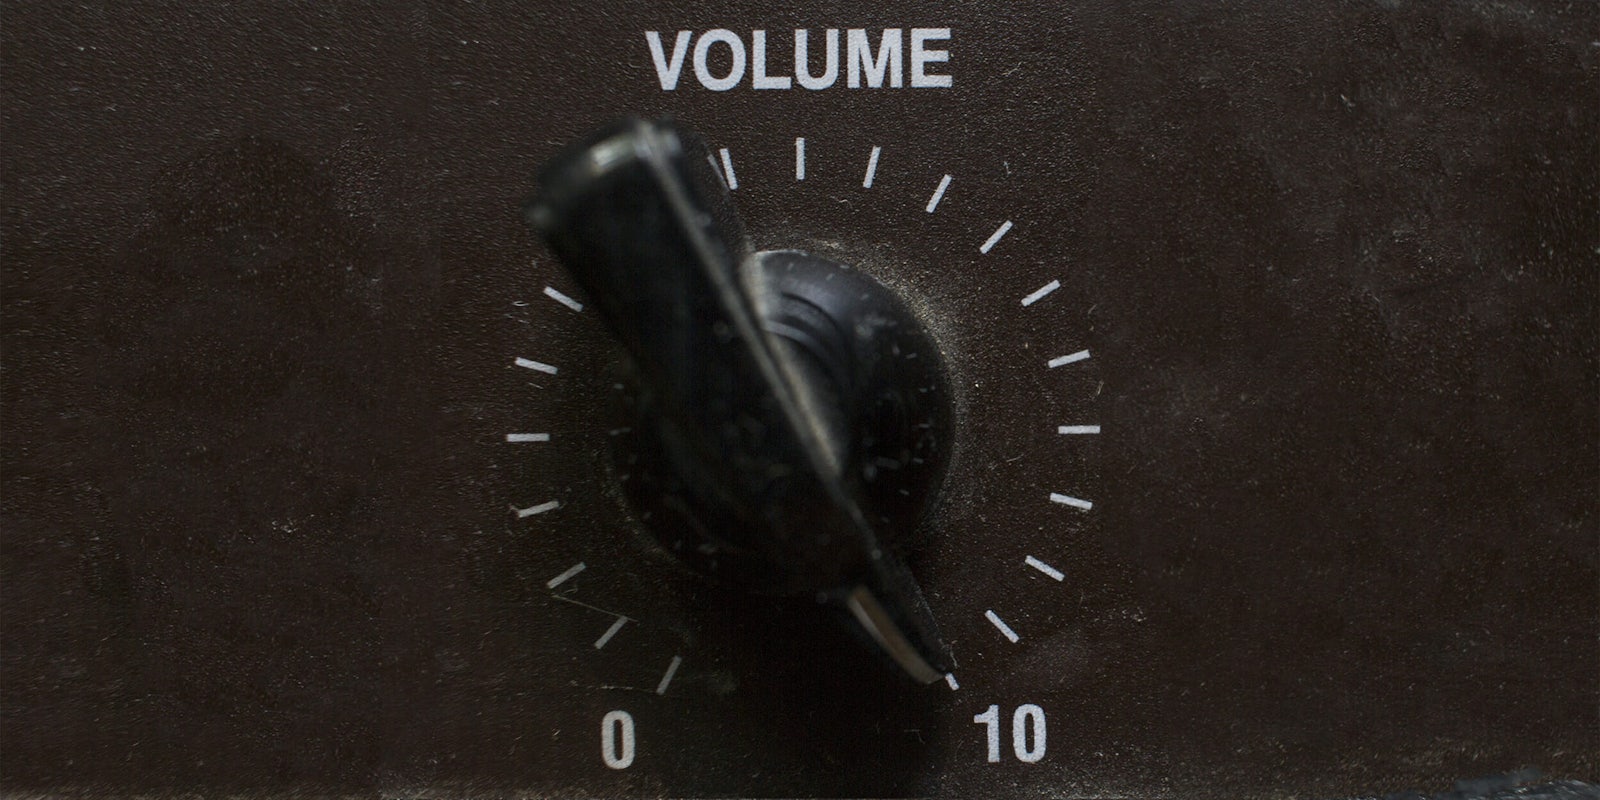 Volume knob set to 10